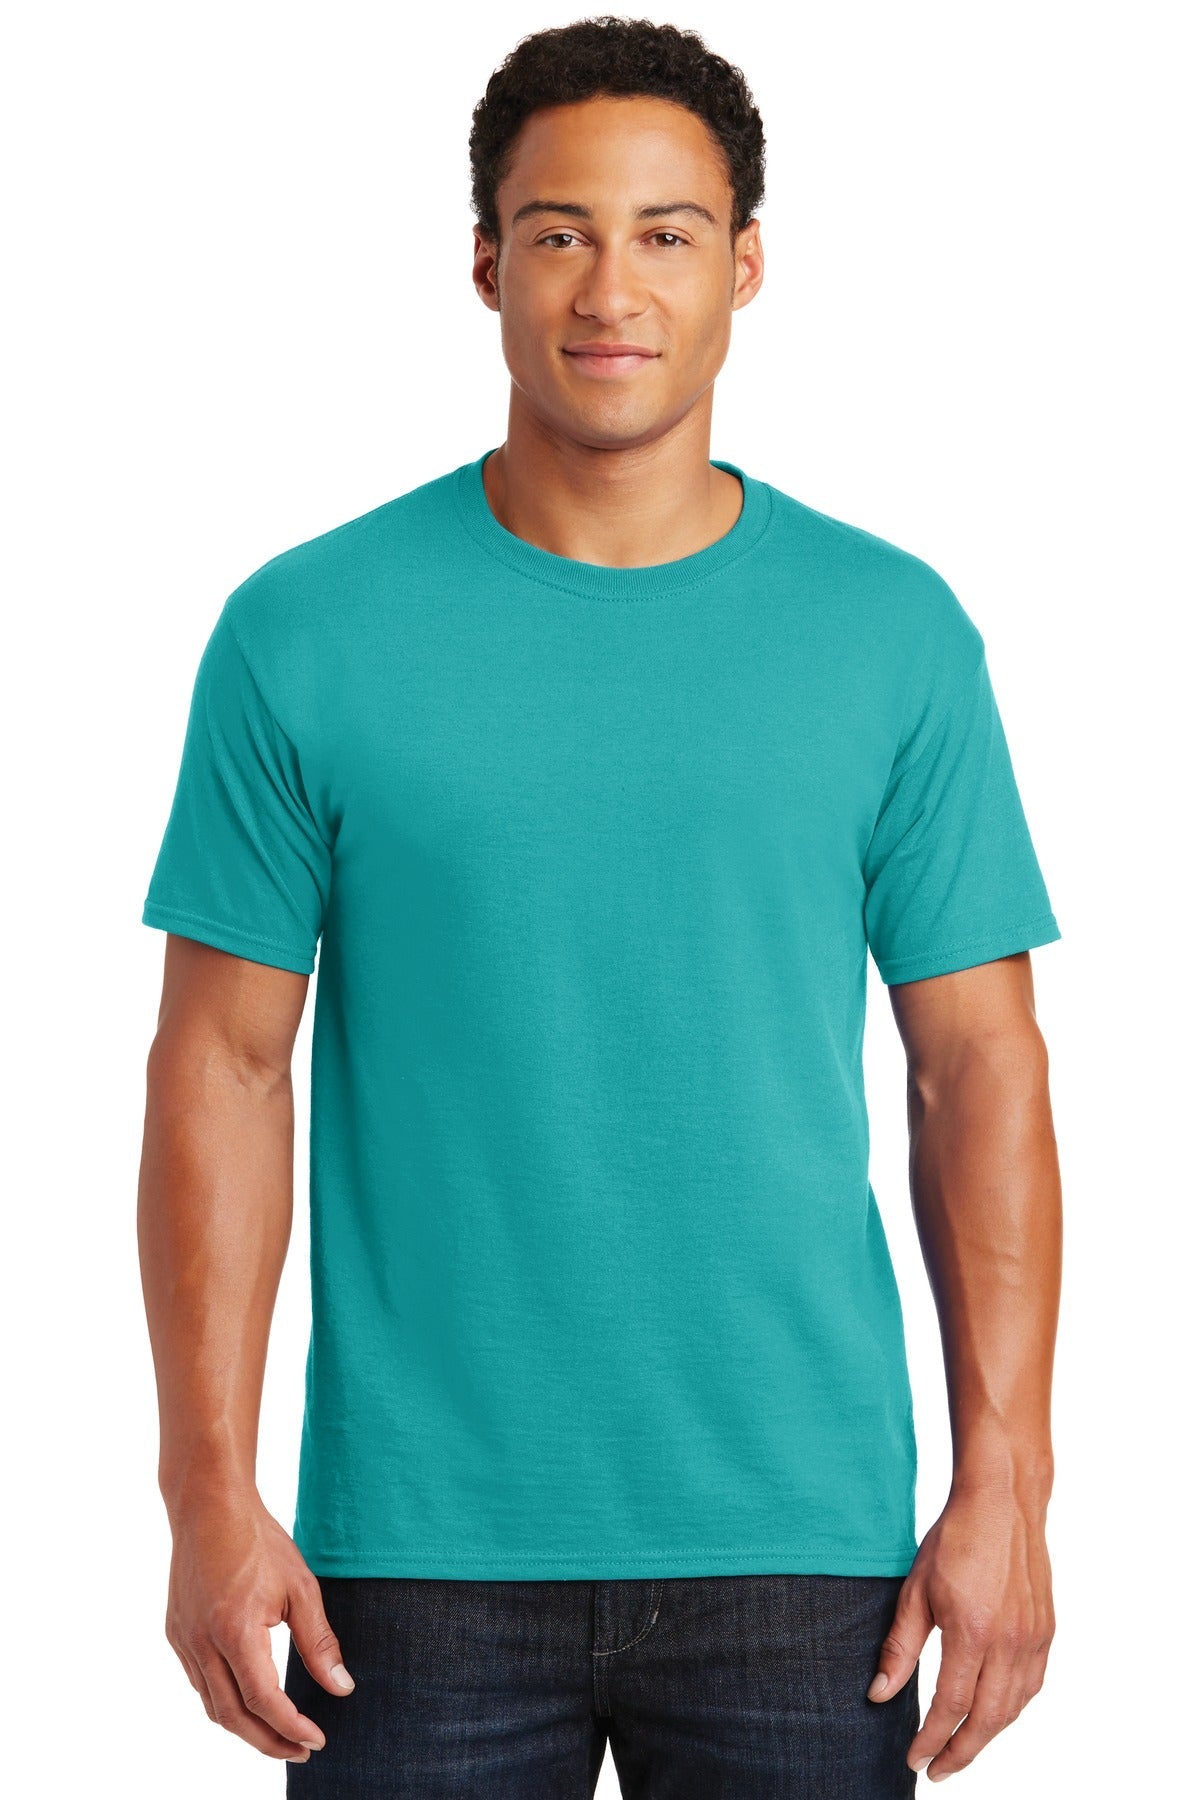 JERZEES® - Dri-Power® 50/50 Cotton/Poly T-Shirt. 29M [Jade] - DFW Impression